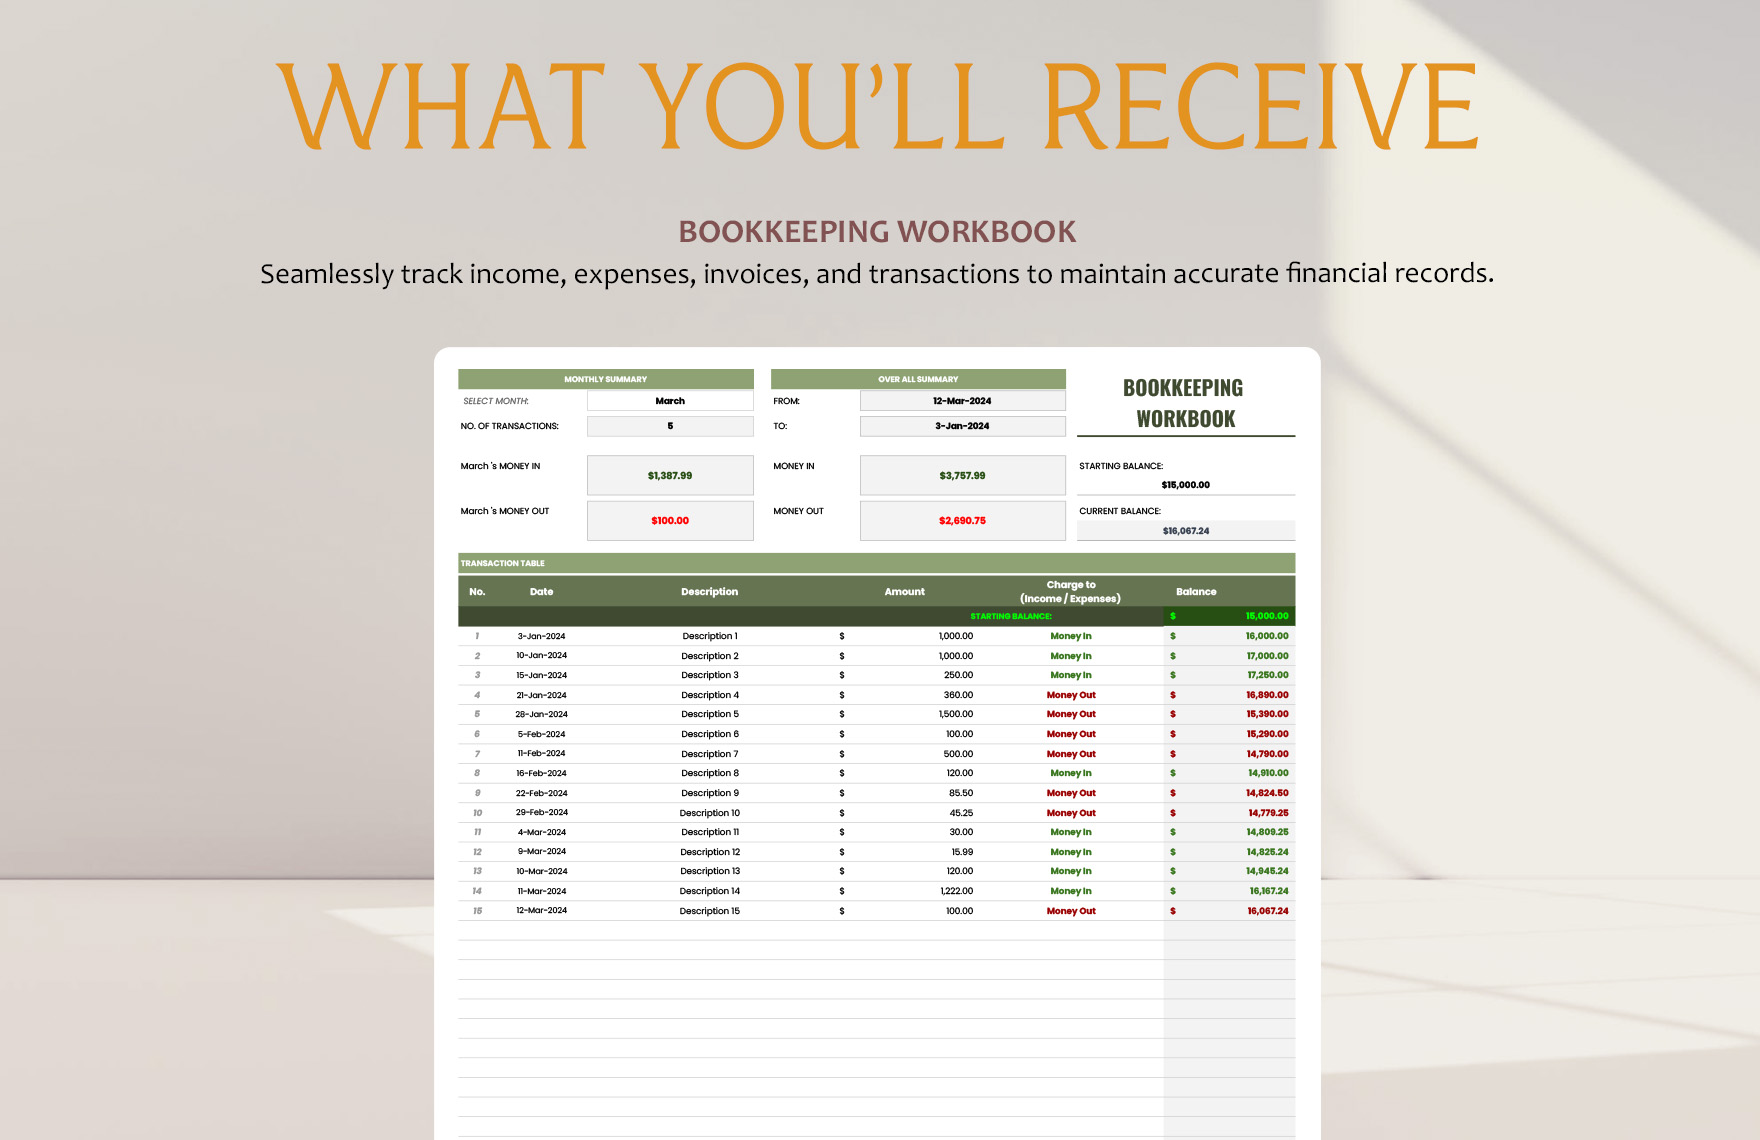 Bookkeeping Workbook Template